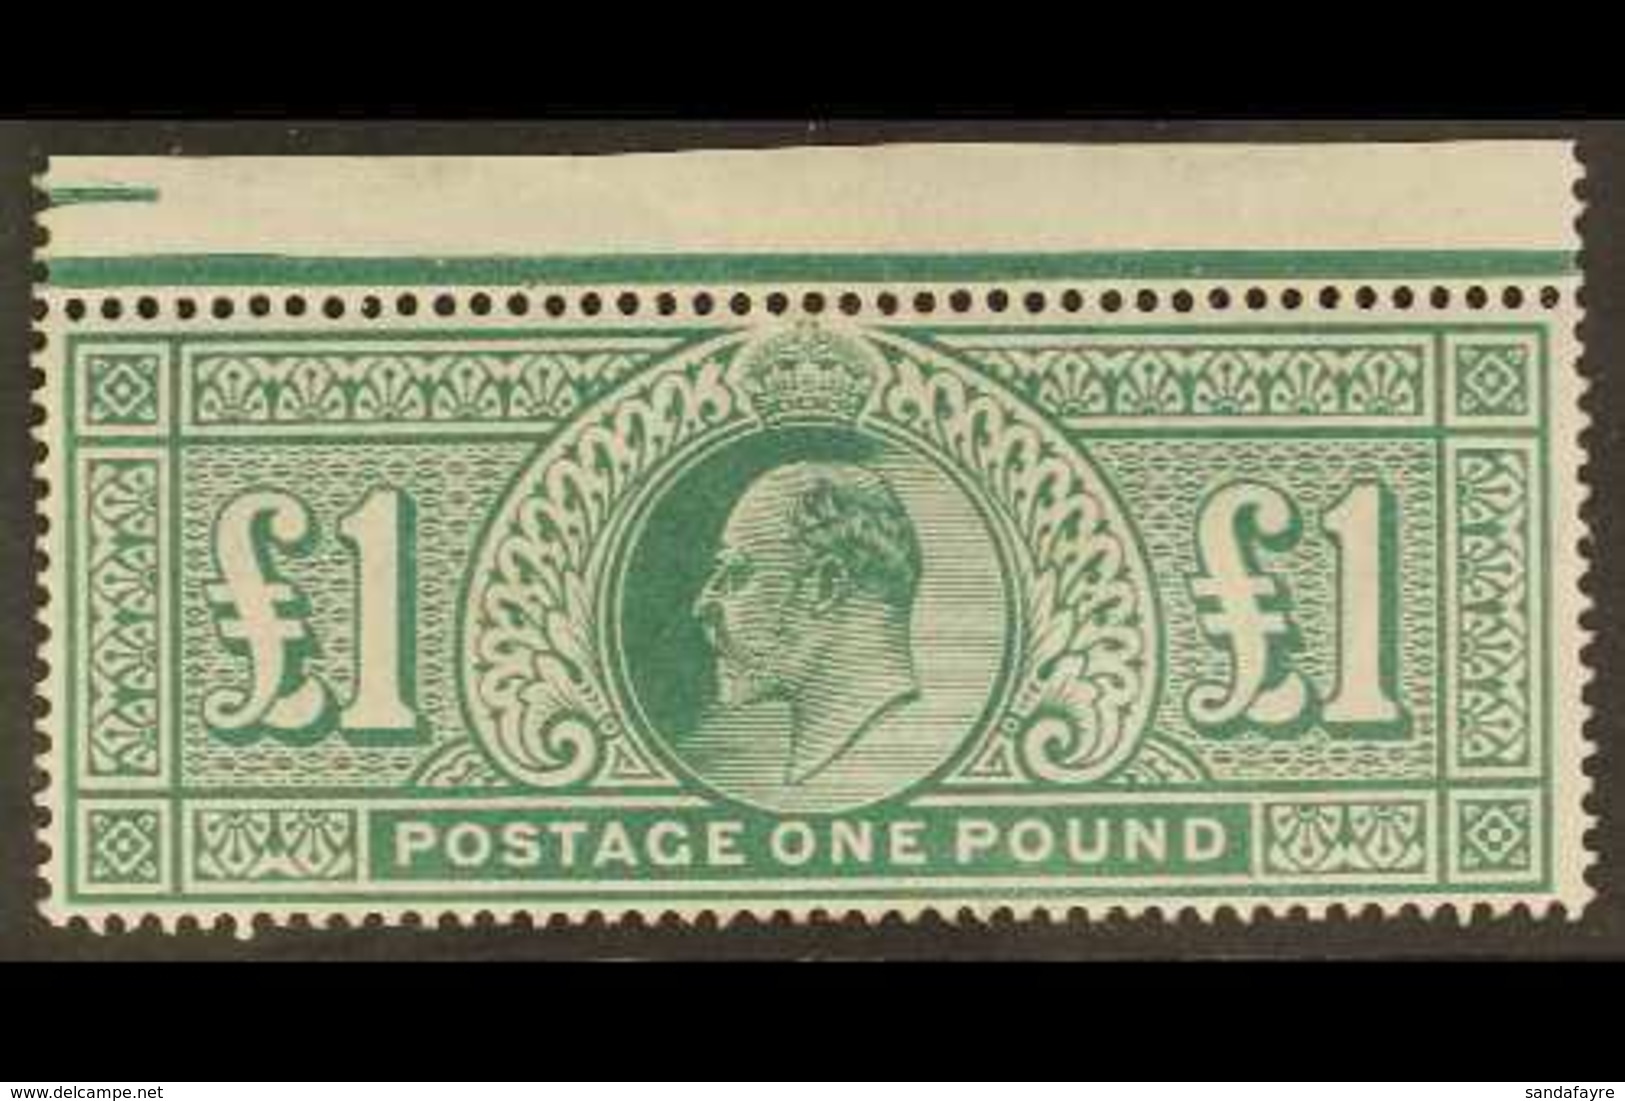 1911 - 13 £1 Deep Green, Somerset House Printing, Ed VII, SG 320, Couple Light Gum Bends Otherwise Very Fine Marginal NE - Ohne Zuordnung